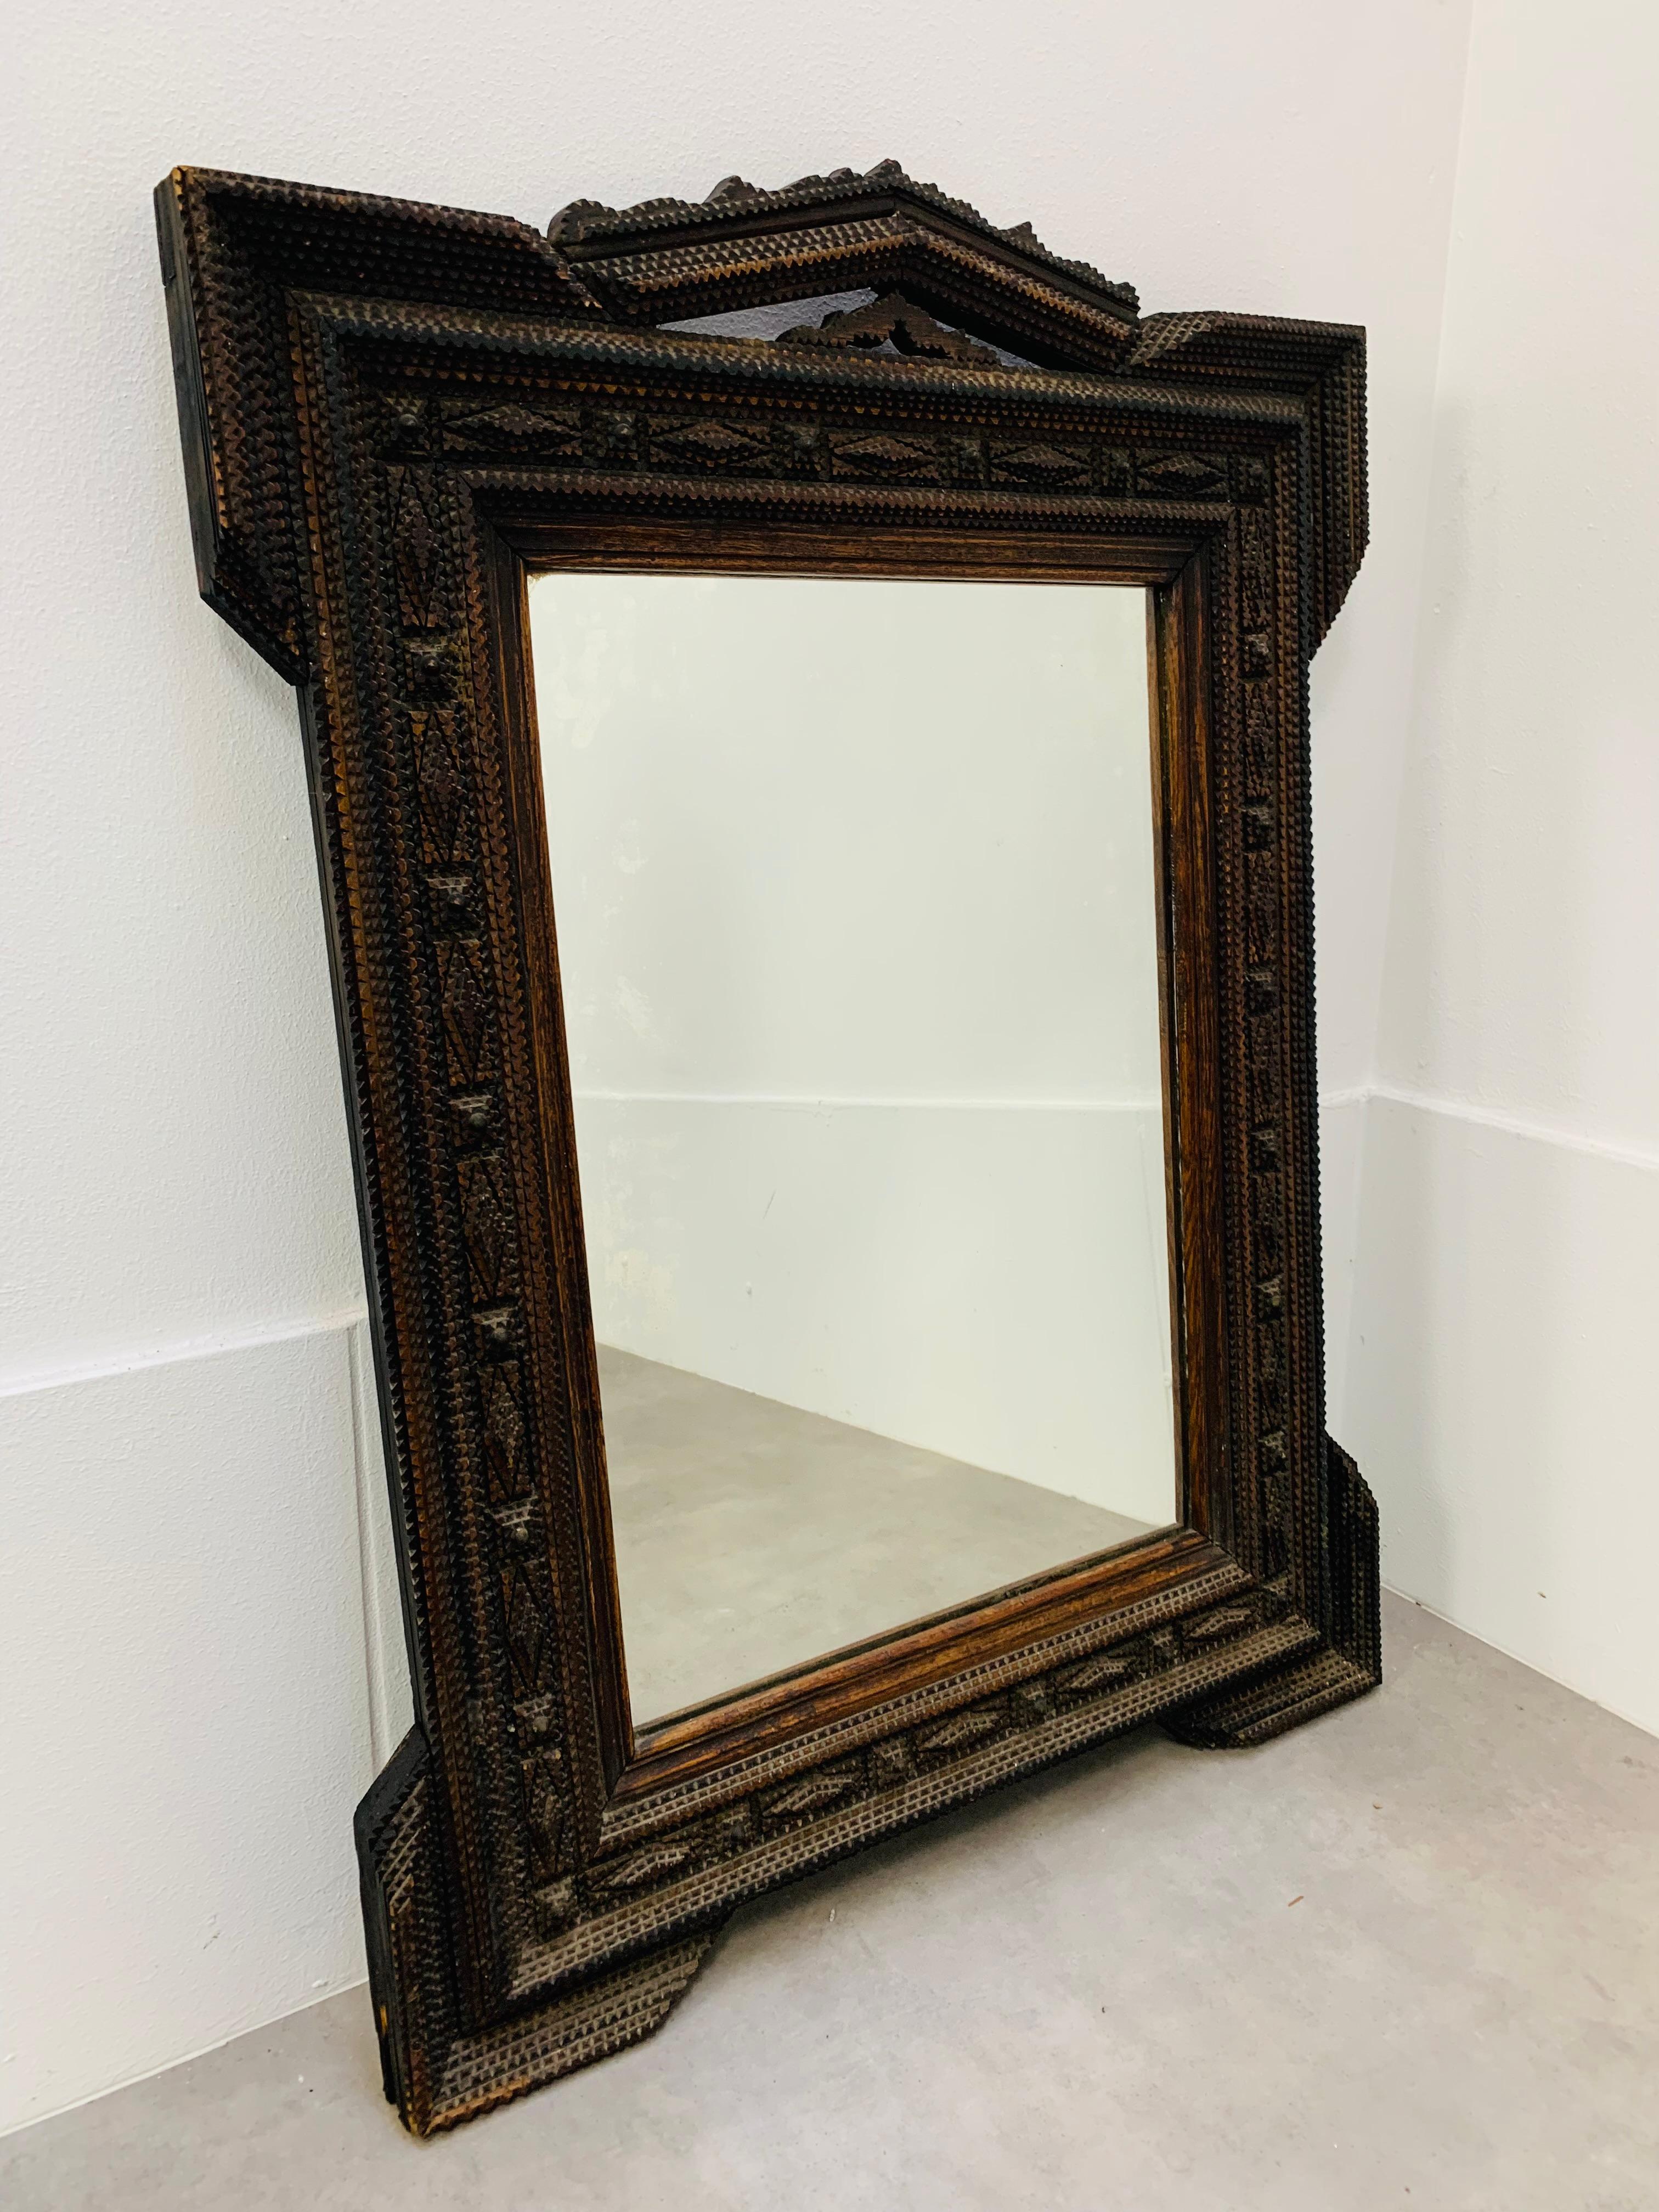 Large french tramp art folk mirror, 1900's. Very beautiful. 